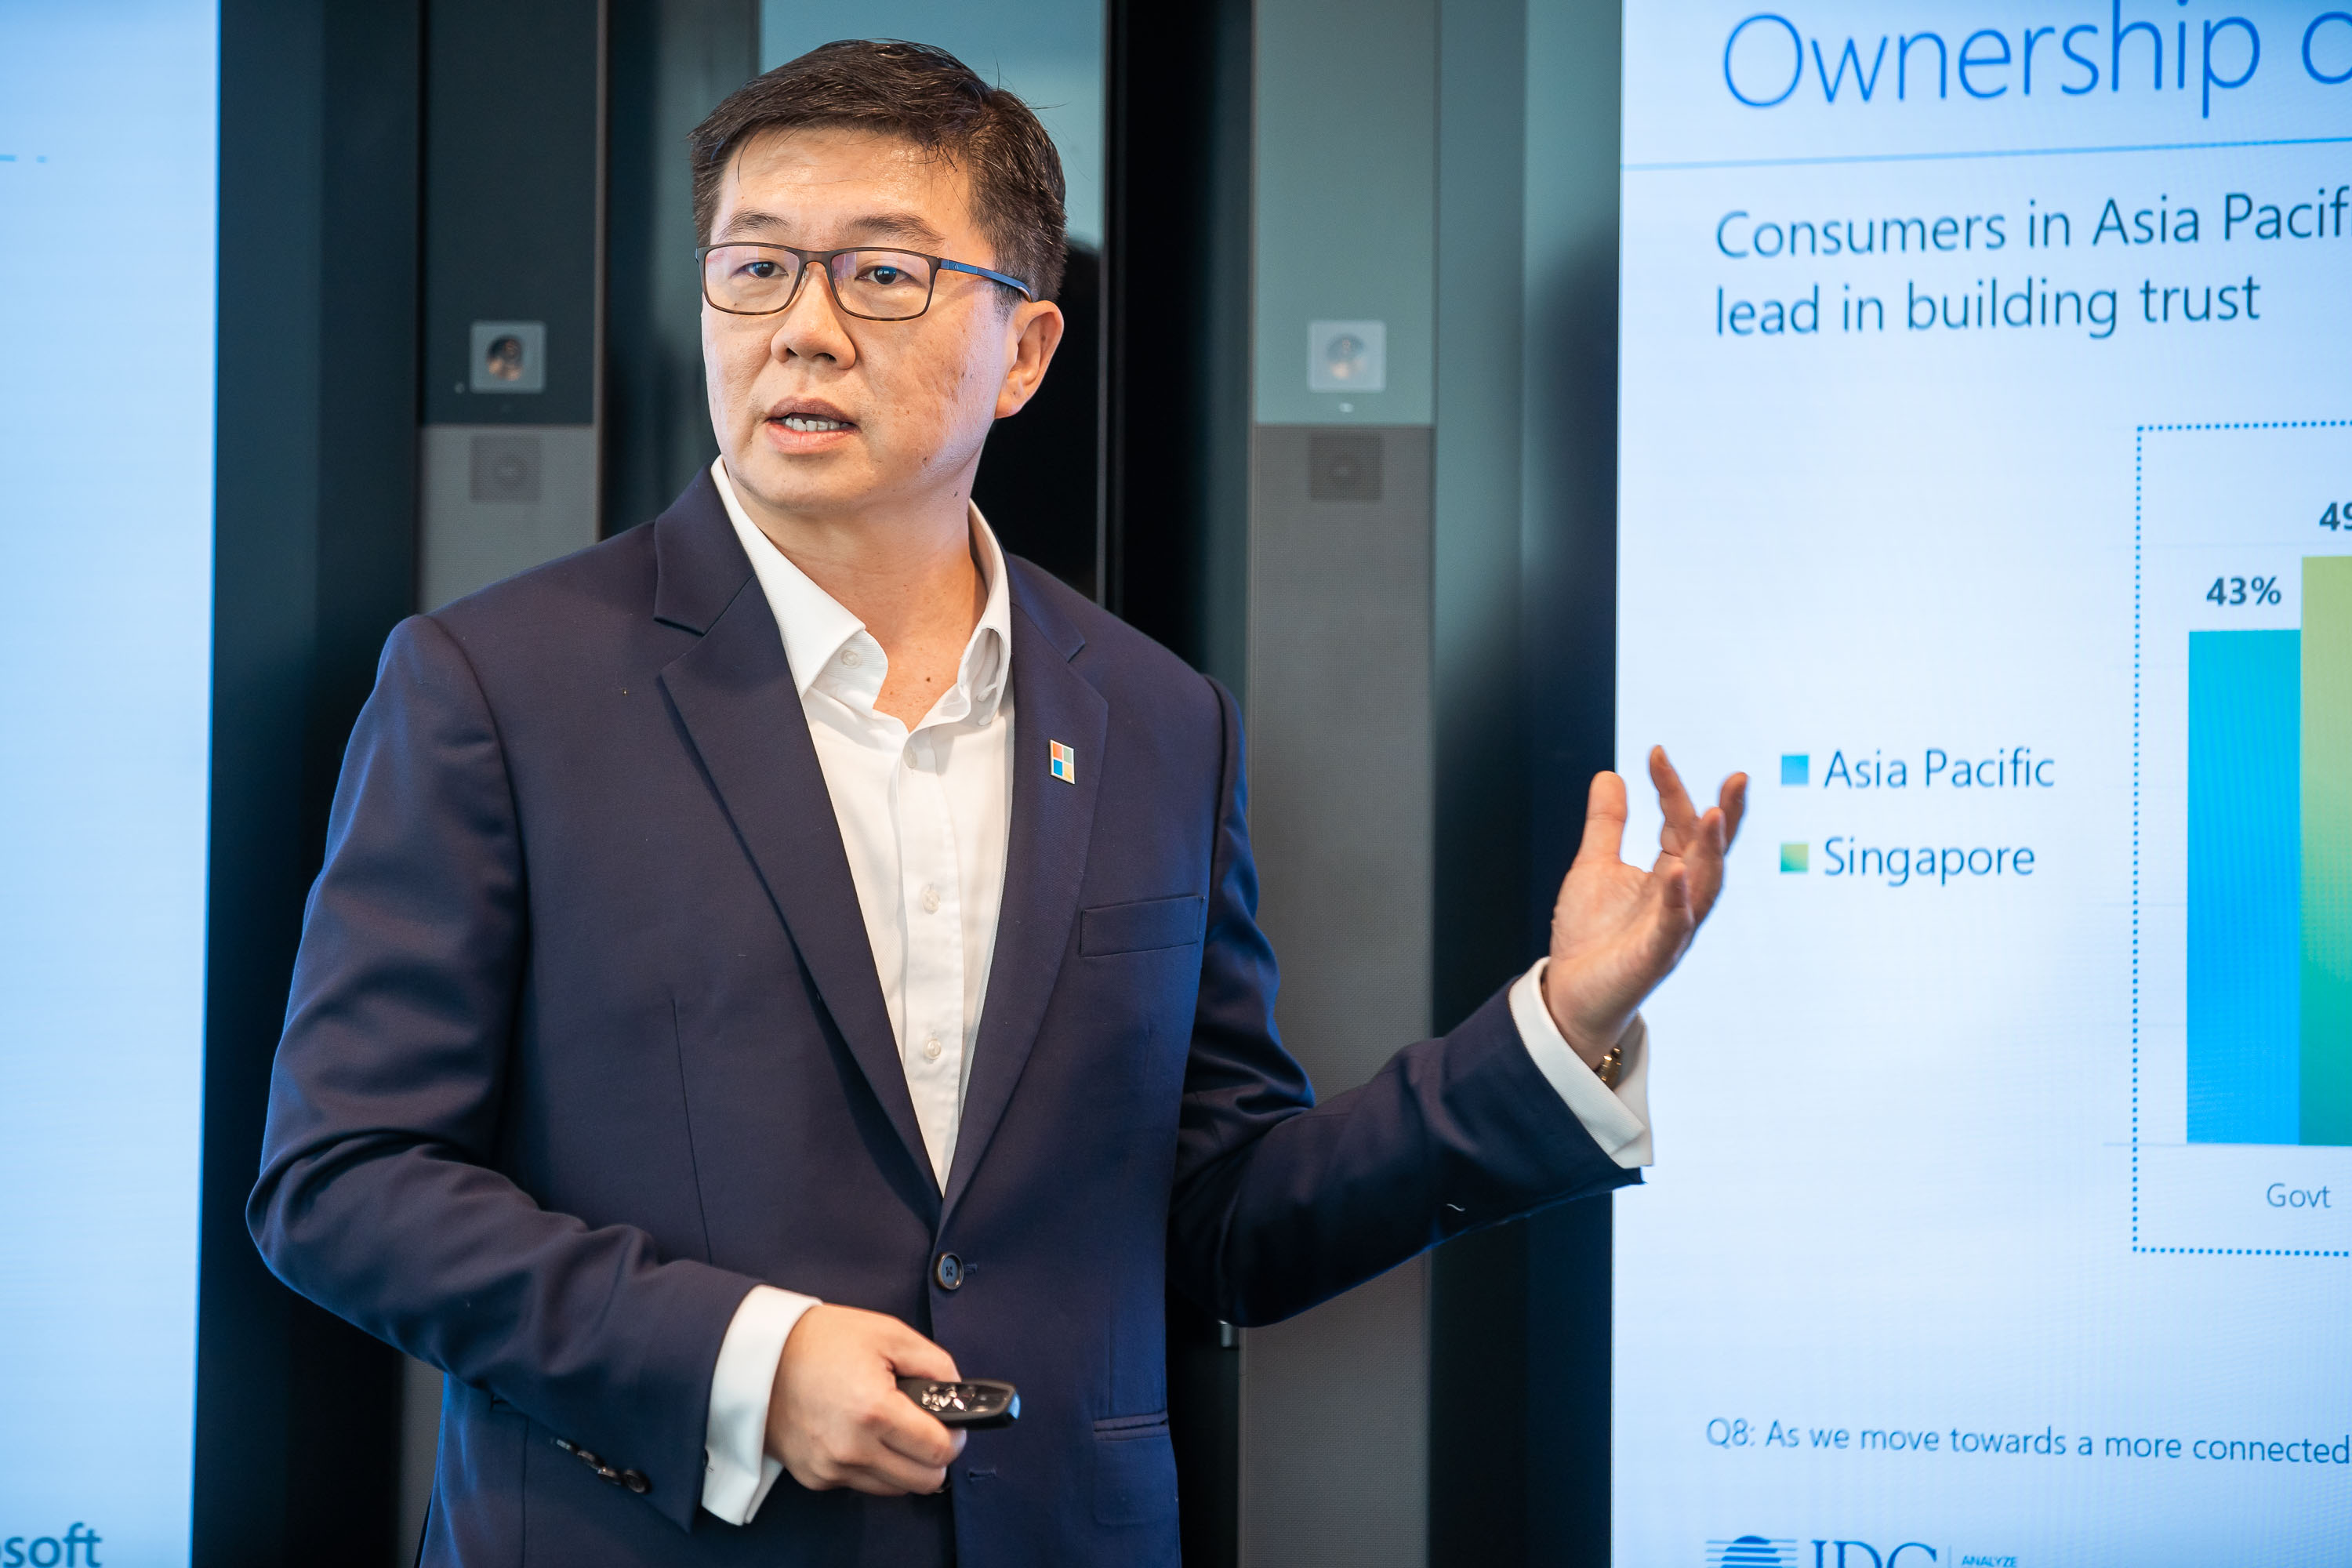 Richard Koh, Chief Technology Officer at Microsoft Singapore